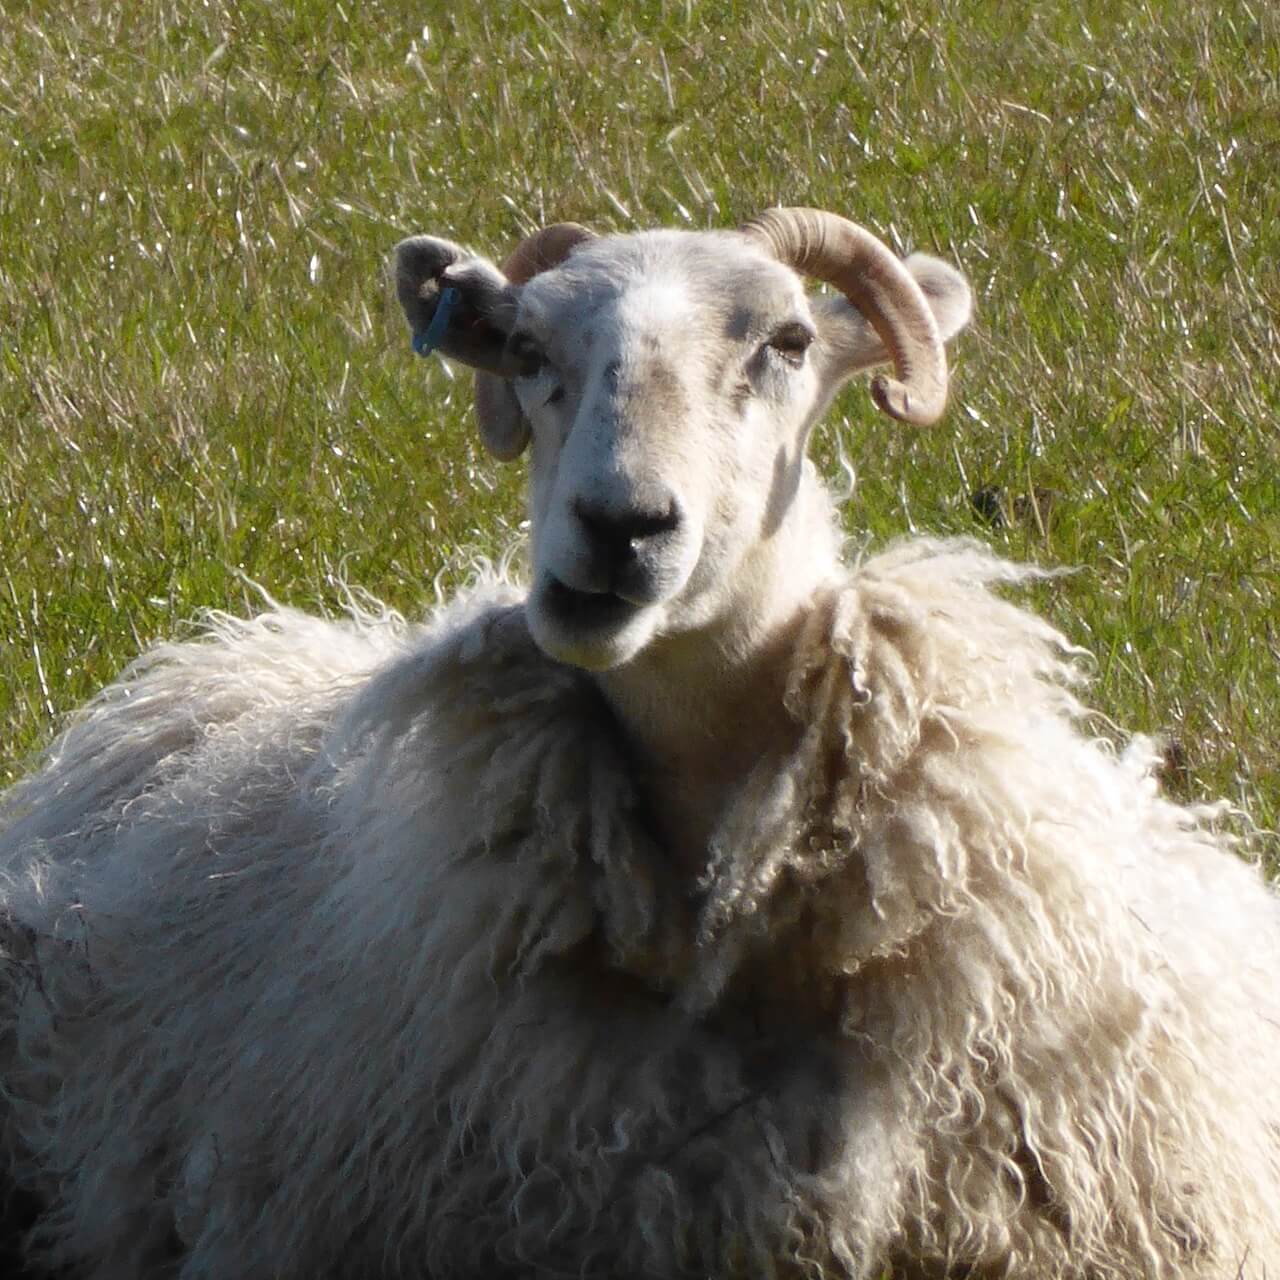 A ewe relaxes on the grass near Kirknewton